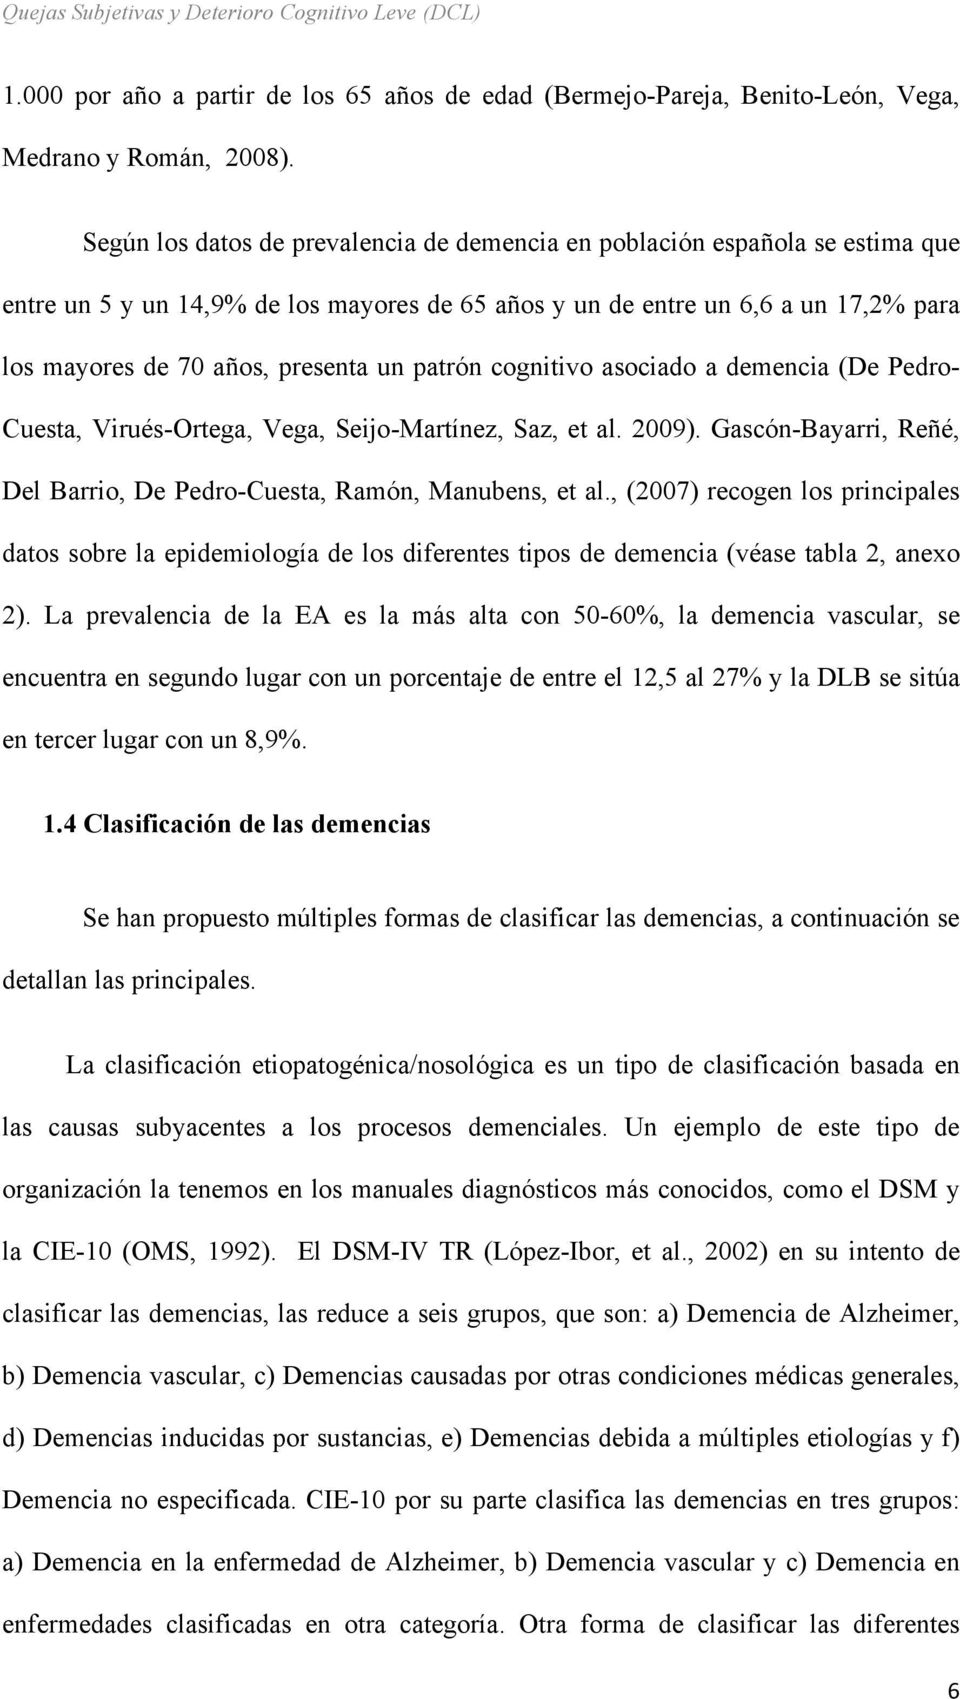 patrón cognitivo asociado a demencia (De Pedro- Cuesta, Virués-Ortega, Vega, Seijo-Martínez, Saz, et al. 2009). Gascón-Bayarri, Reñé, Del Barrio, De Pedro-Cuesta, Ramón, Manubens, et al.